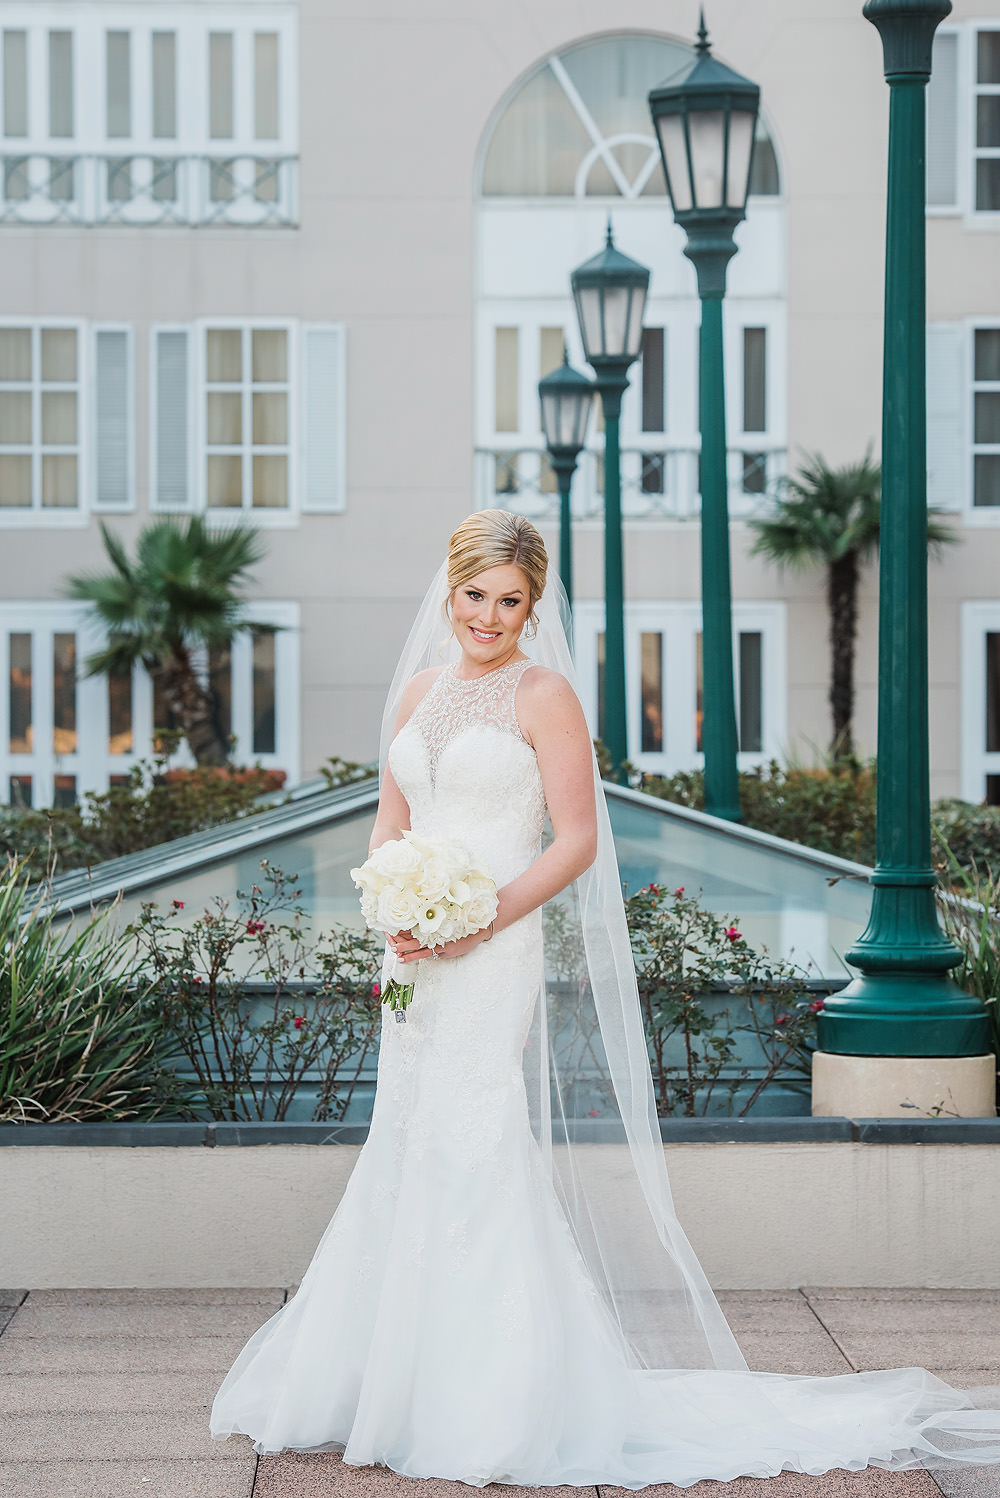 New Orleans St Joseph Church and City Park Wedding | Kory + Kayla